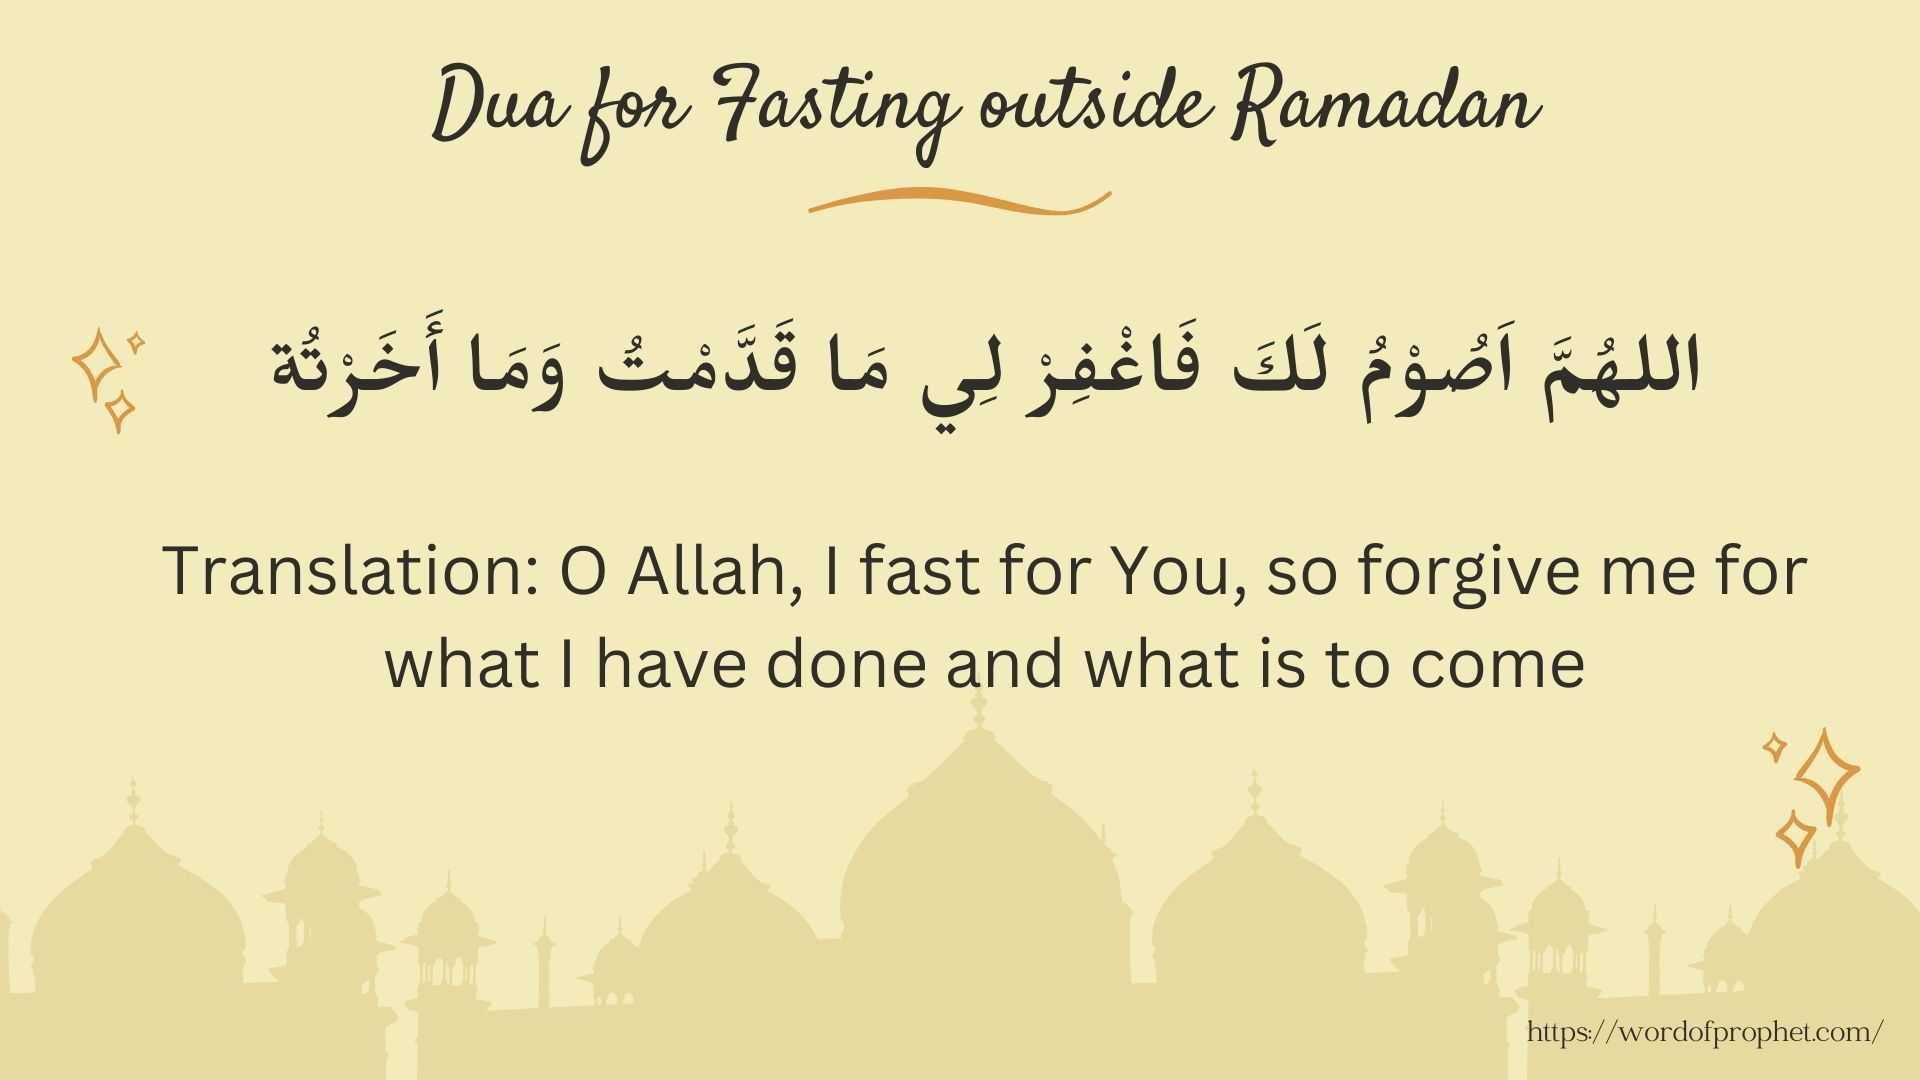 Dua for Fasting outside Ramadan